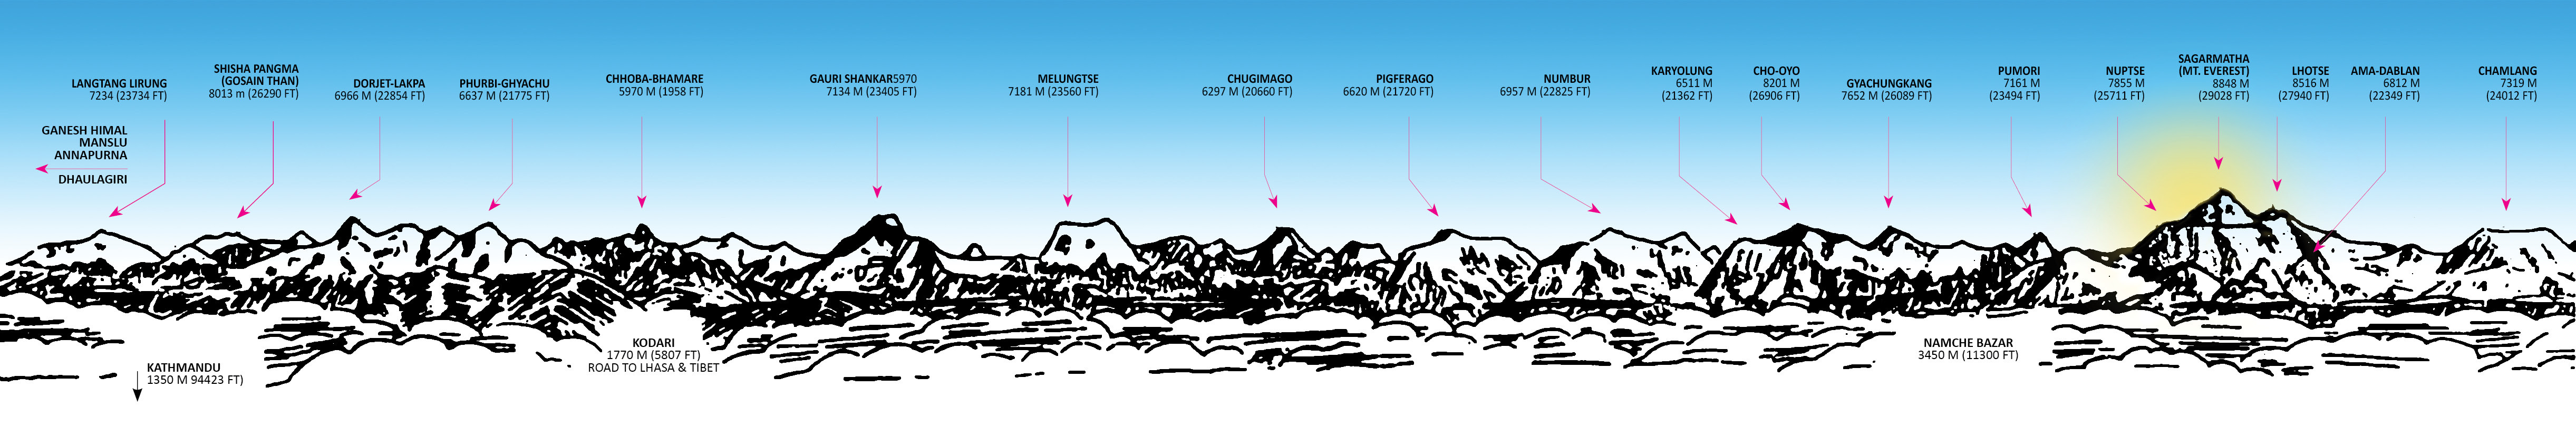 Mountain ranges from mount everest flight